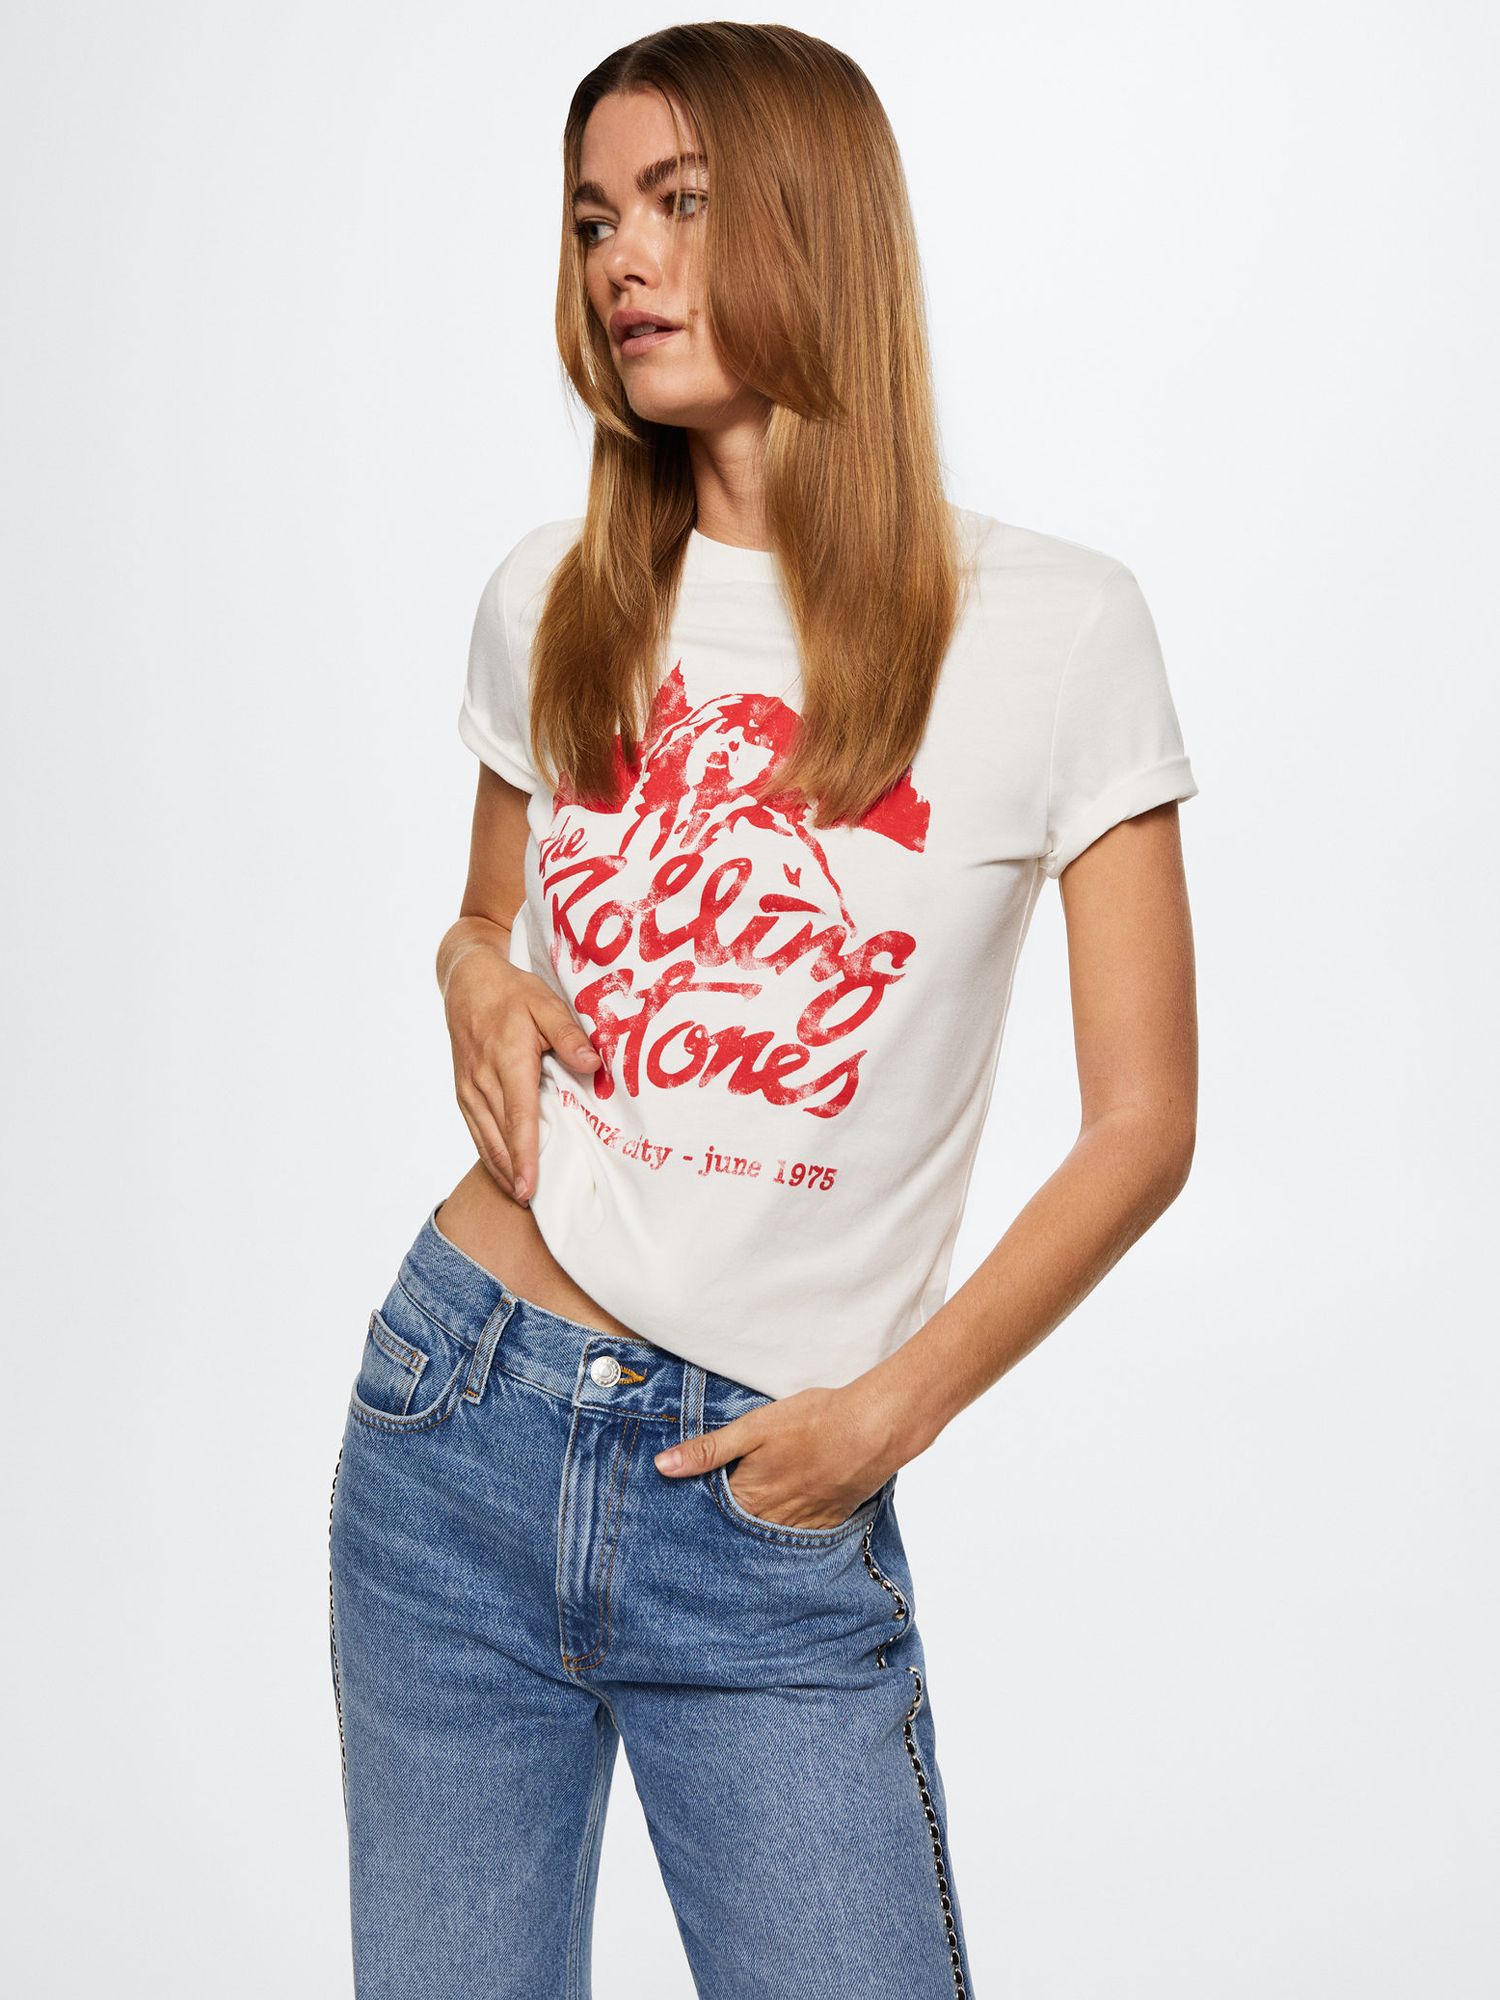 Mango Rolling Stones T-Shirt, White/Red at John Lewis & Partners